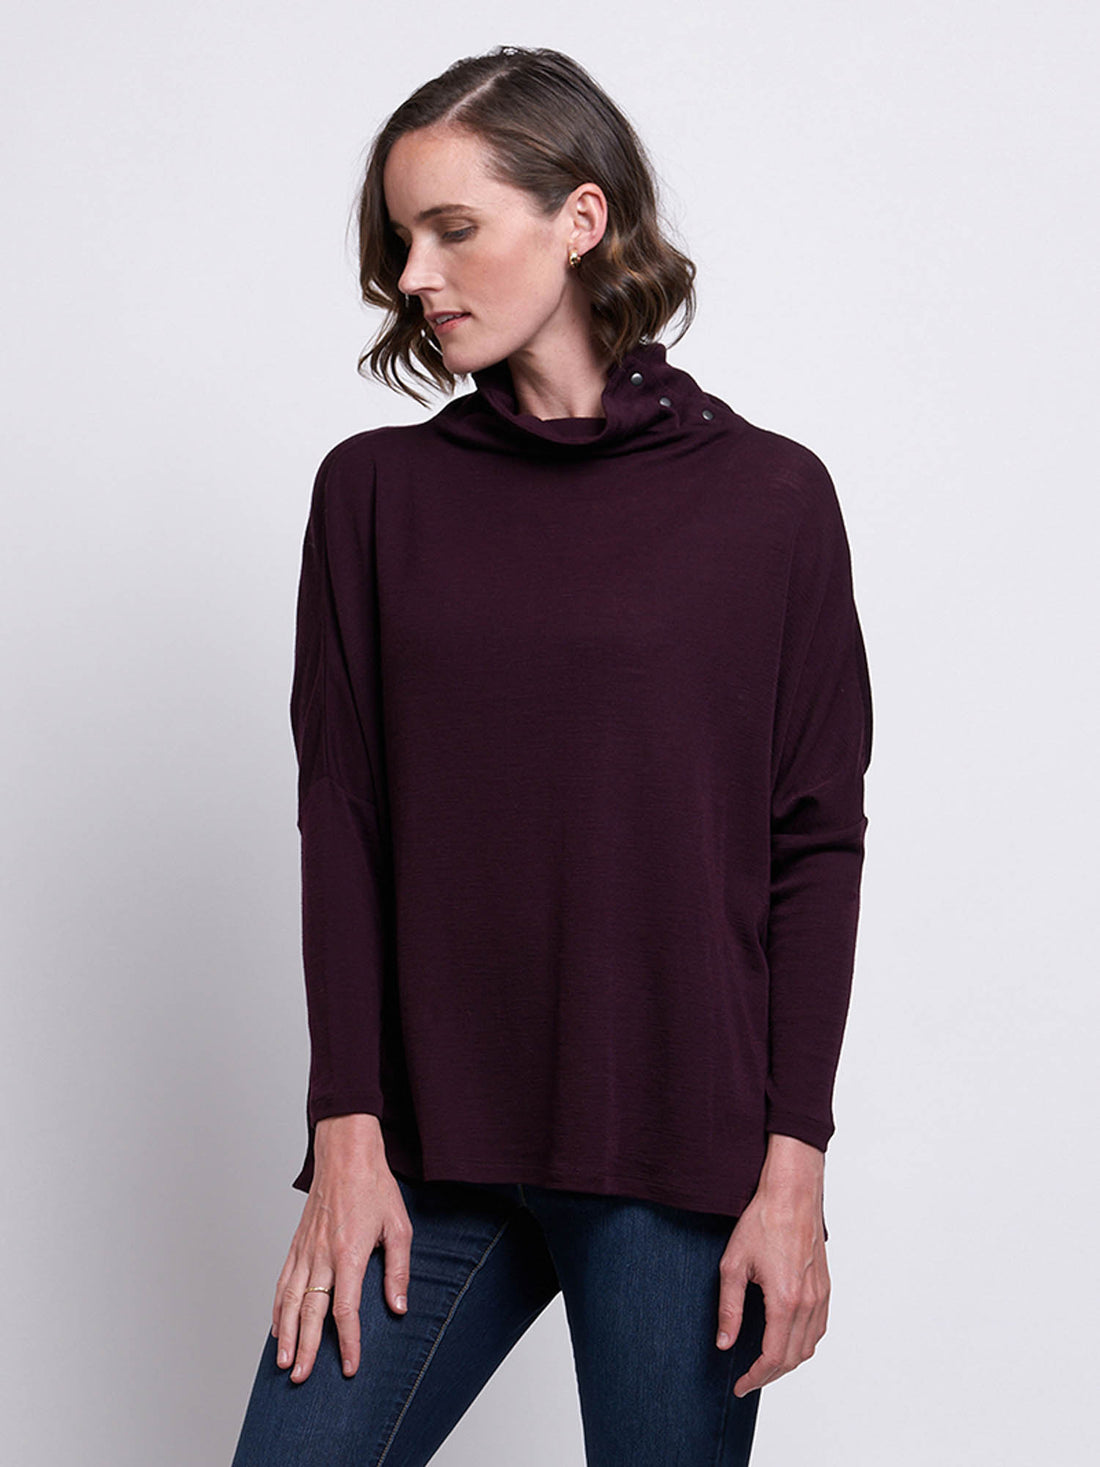 Plum burgundy sweater cute neck